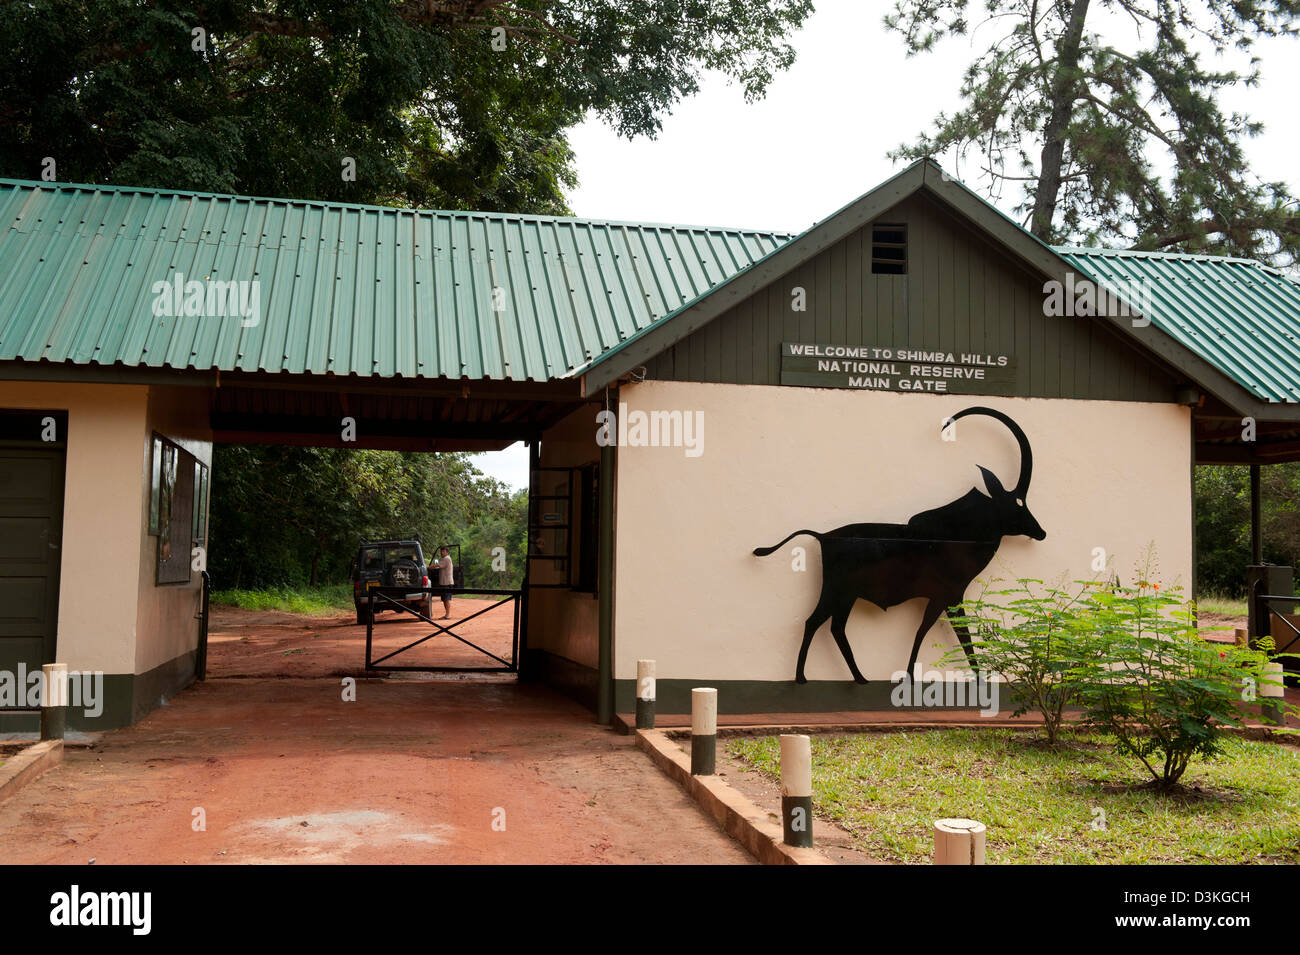 Entrée de Shimba Hills National Reserve, Kenya Banque D'Images